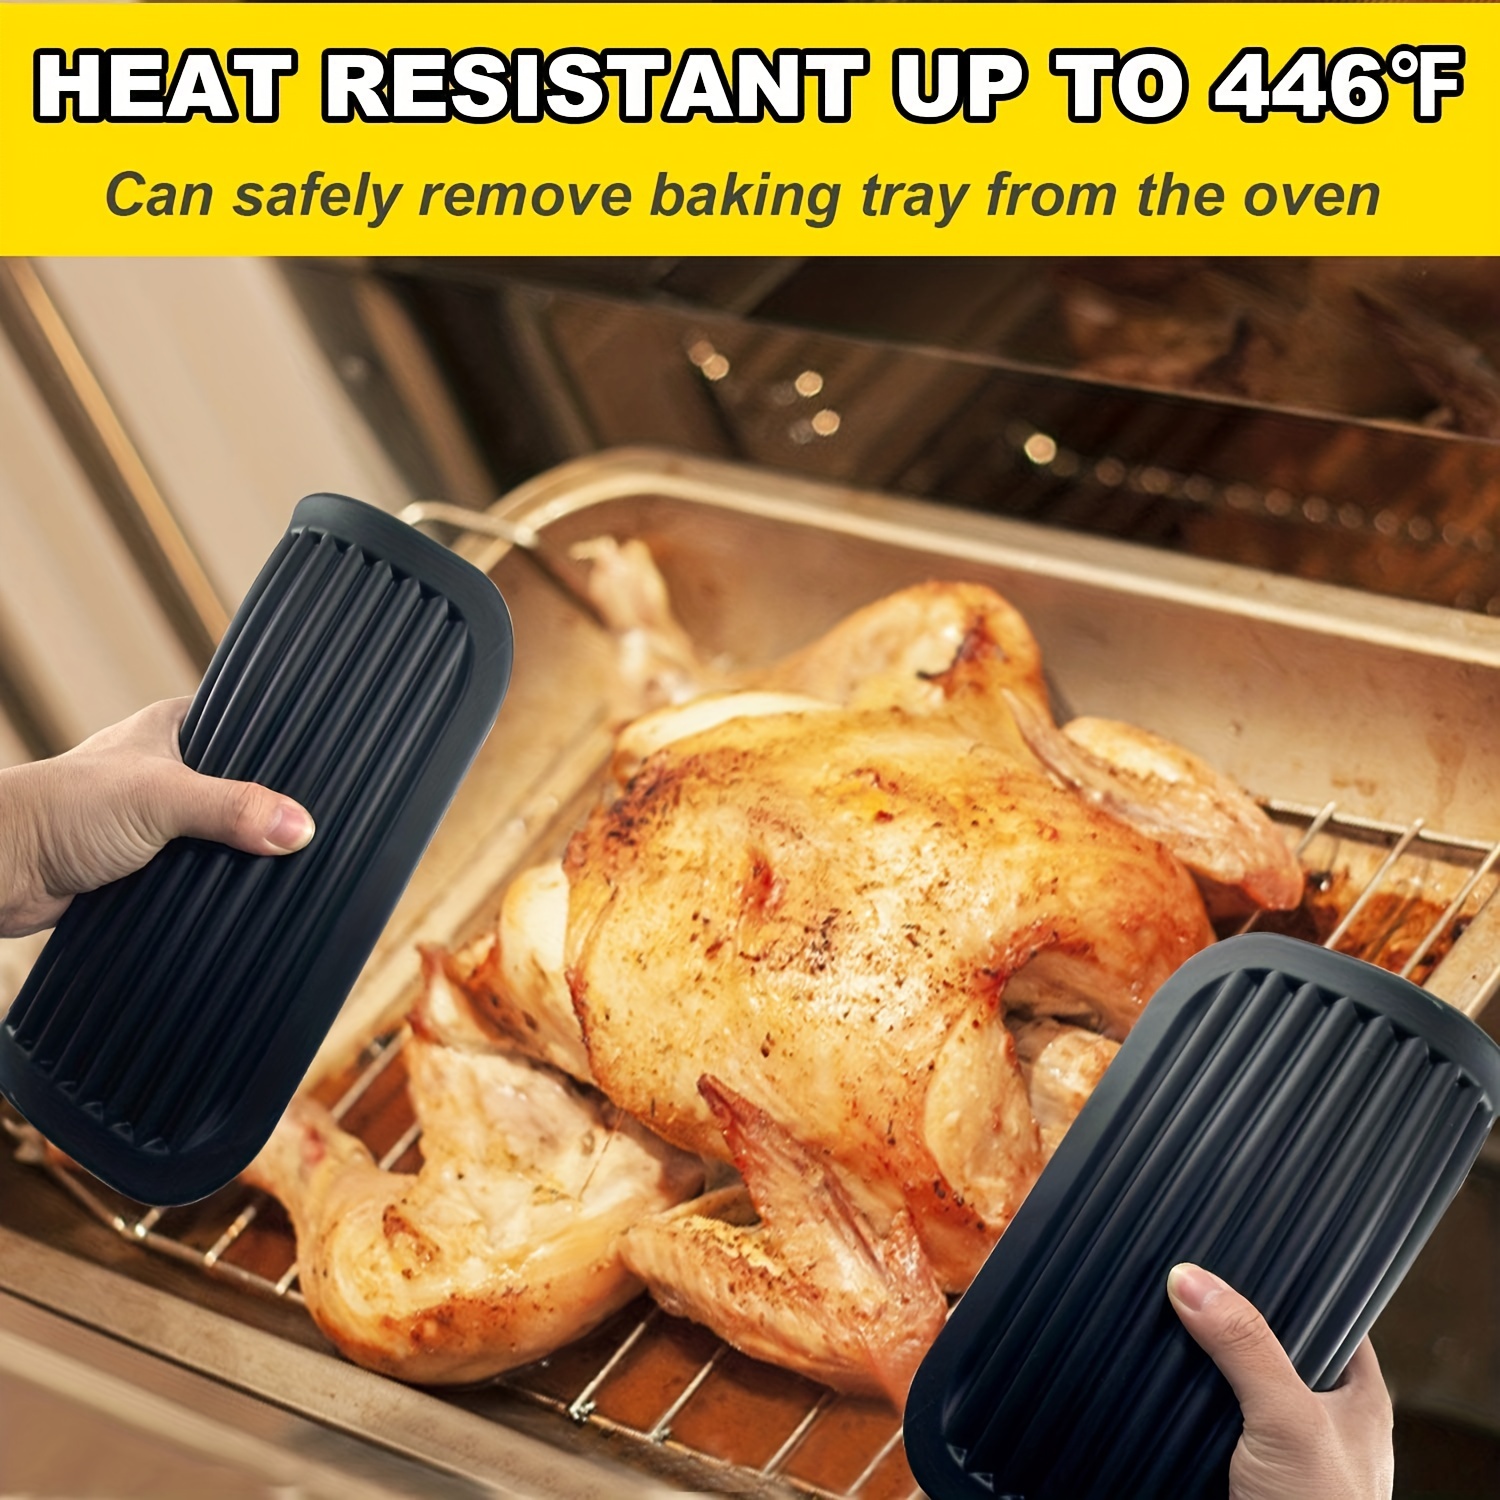 Heat Resistant Multi-Purpose Durable Silicone Mat Kitchen